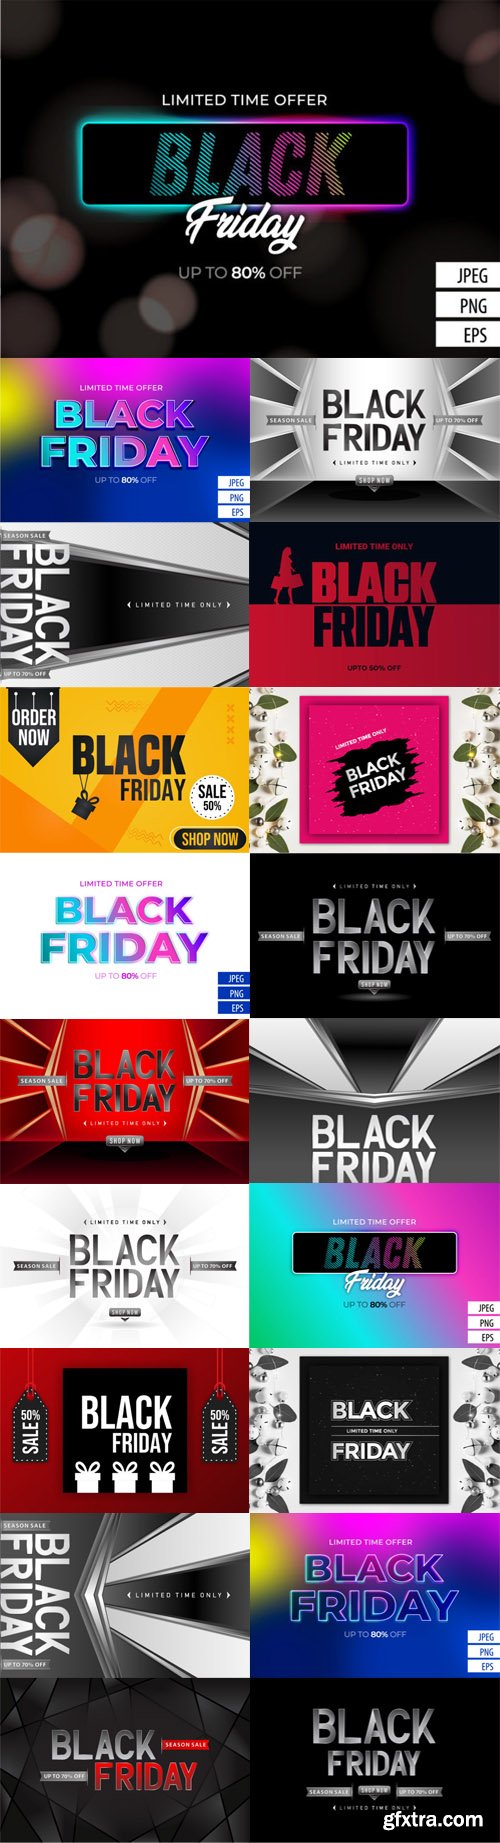 Black Friday Sales Vector Design Templates Collection